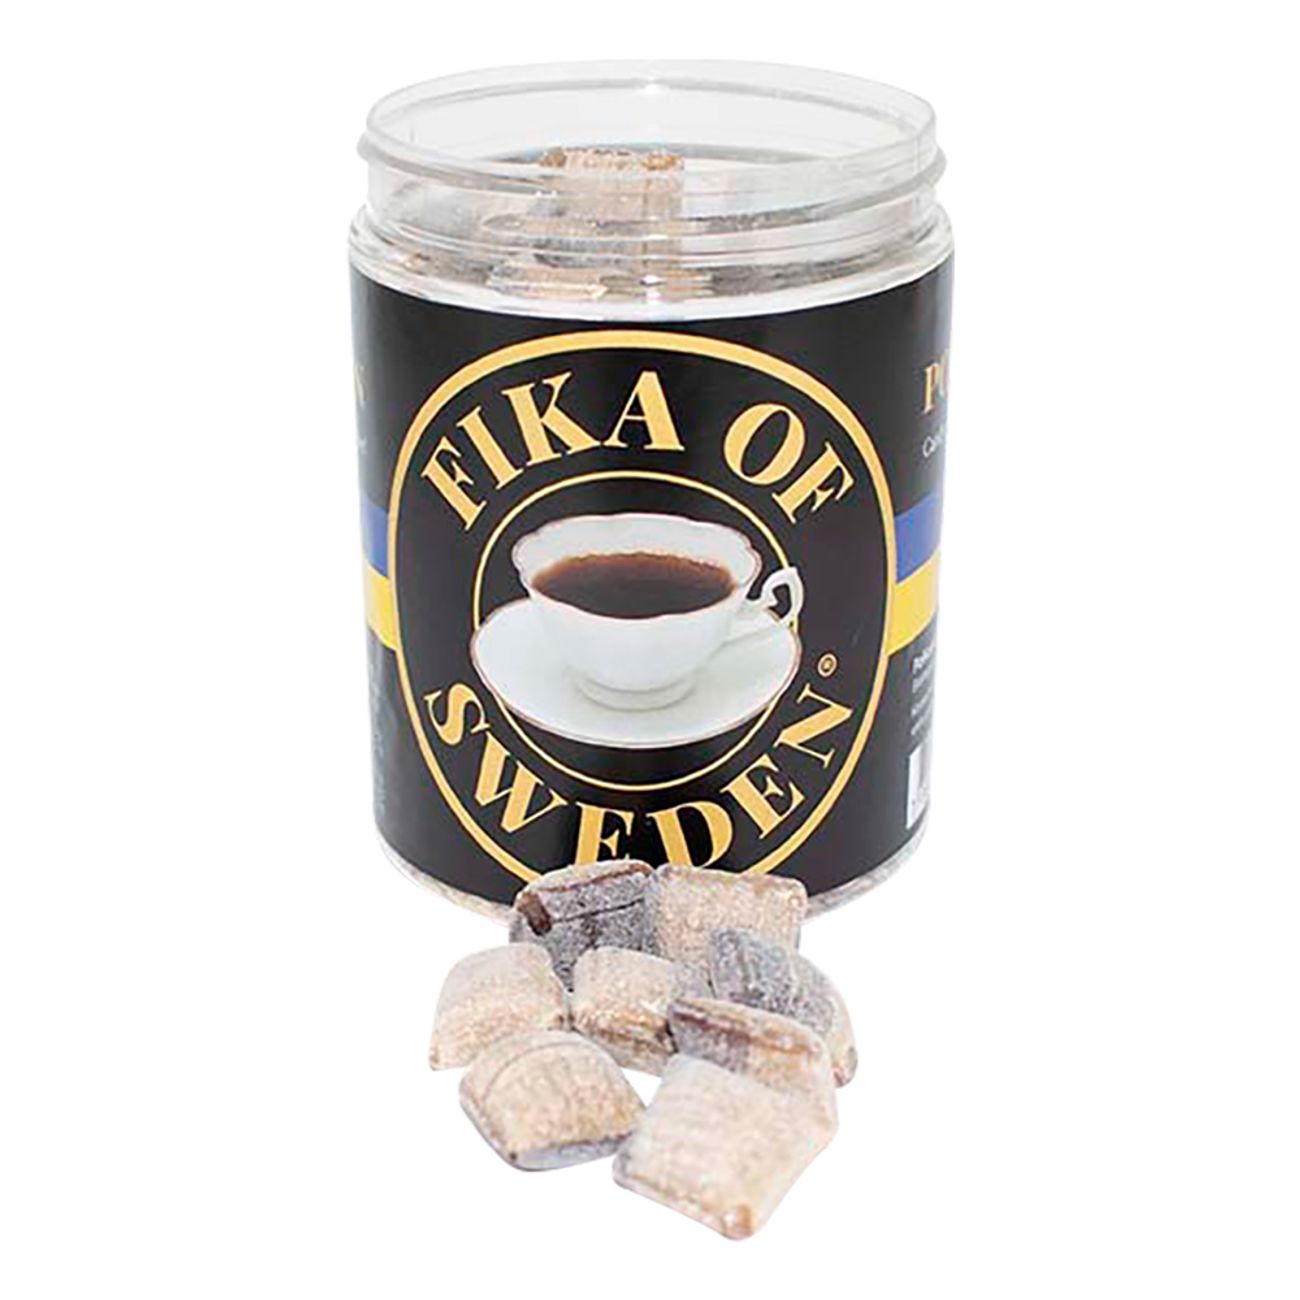 fika-of-sweden-kaffe-72925-1